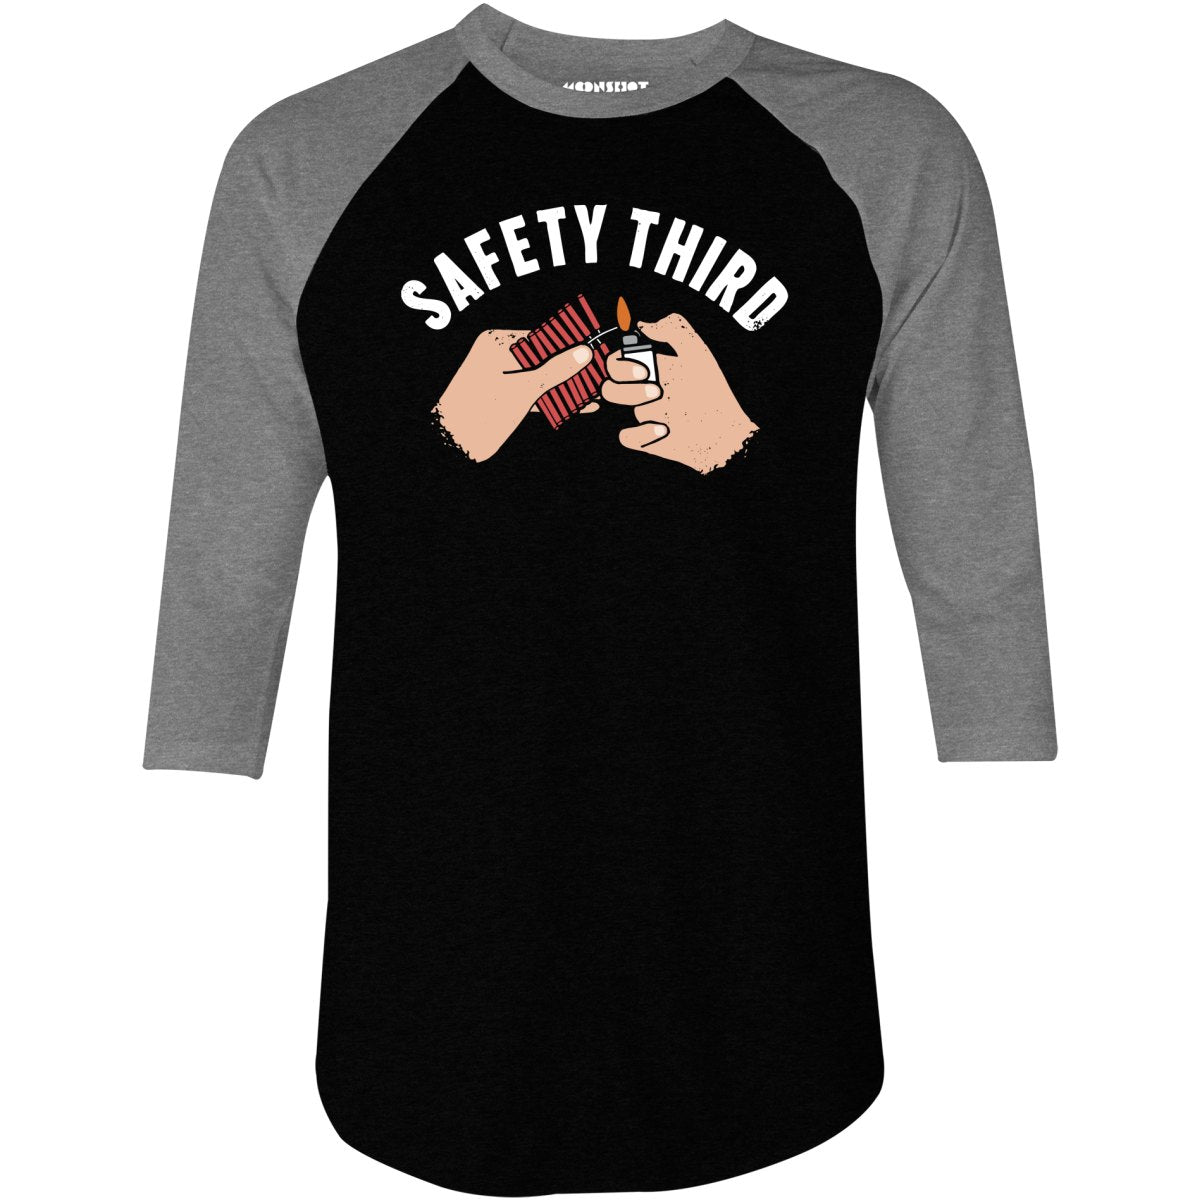 Safety Third - 3/4 Sleeve Raglan T-Shirt